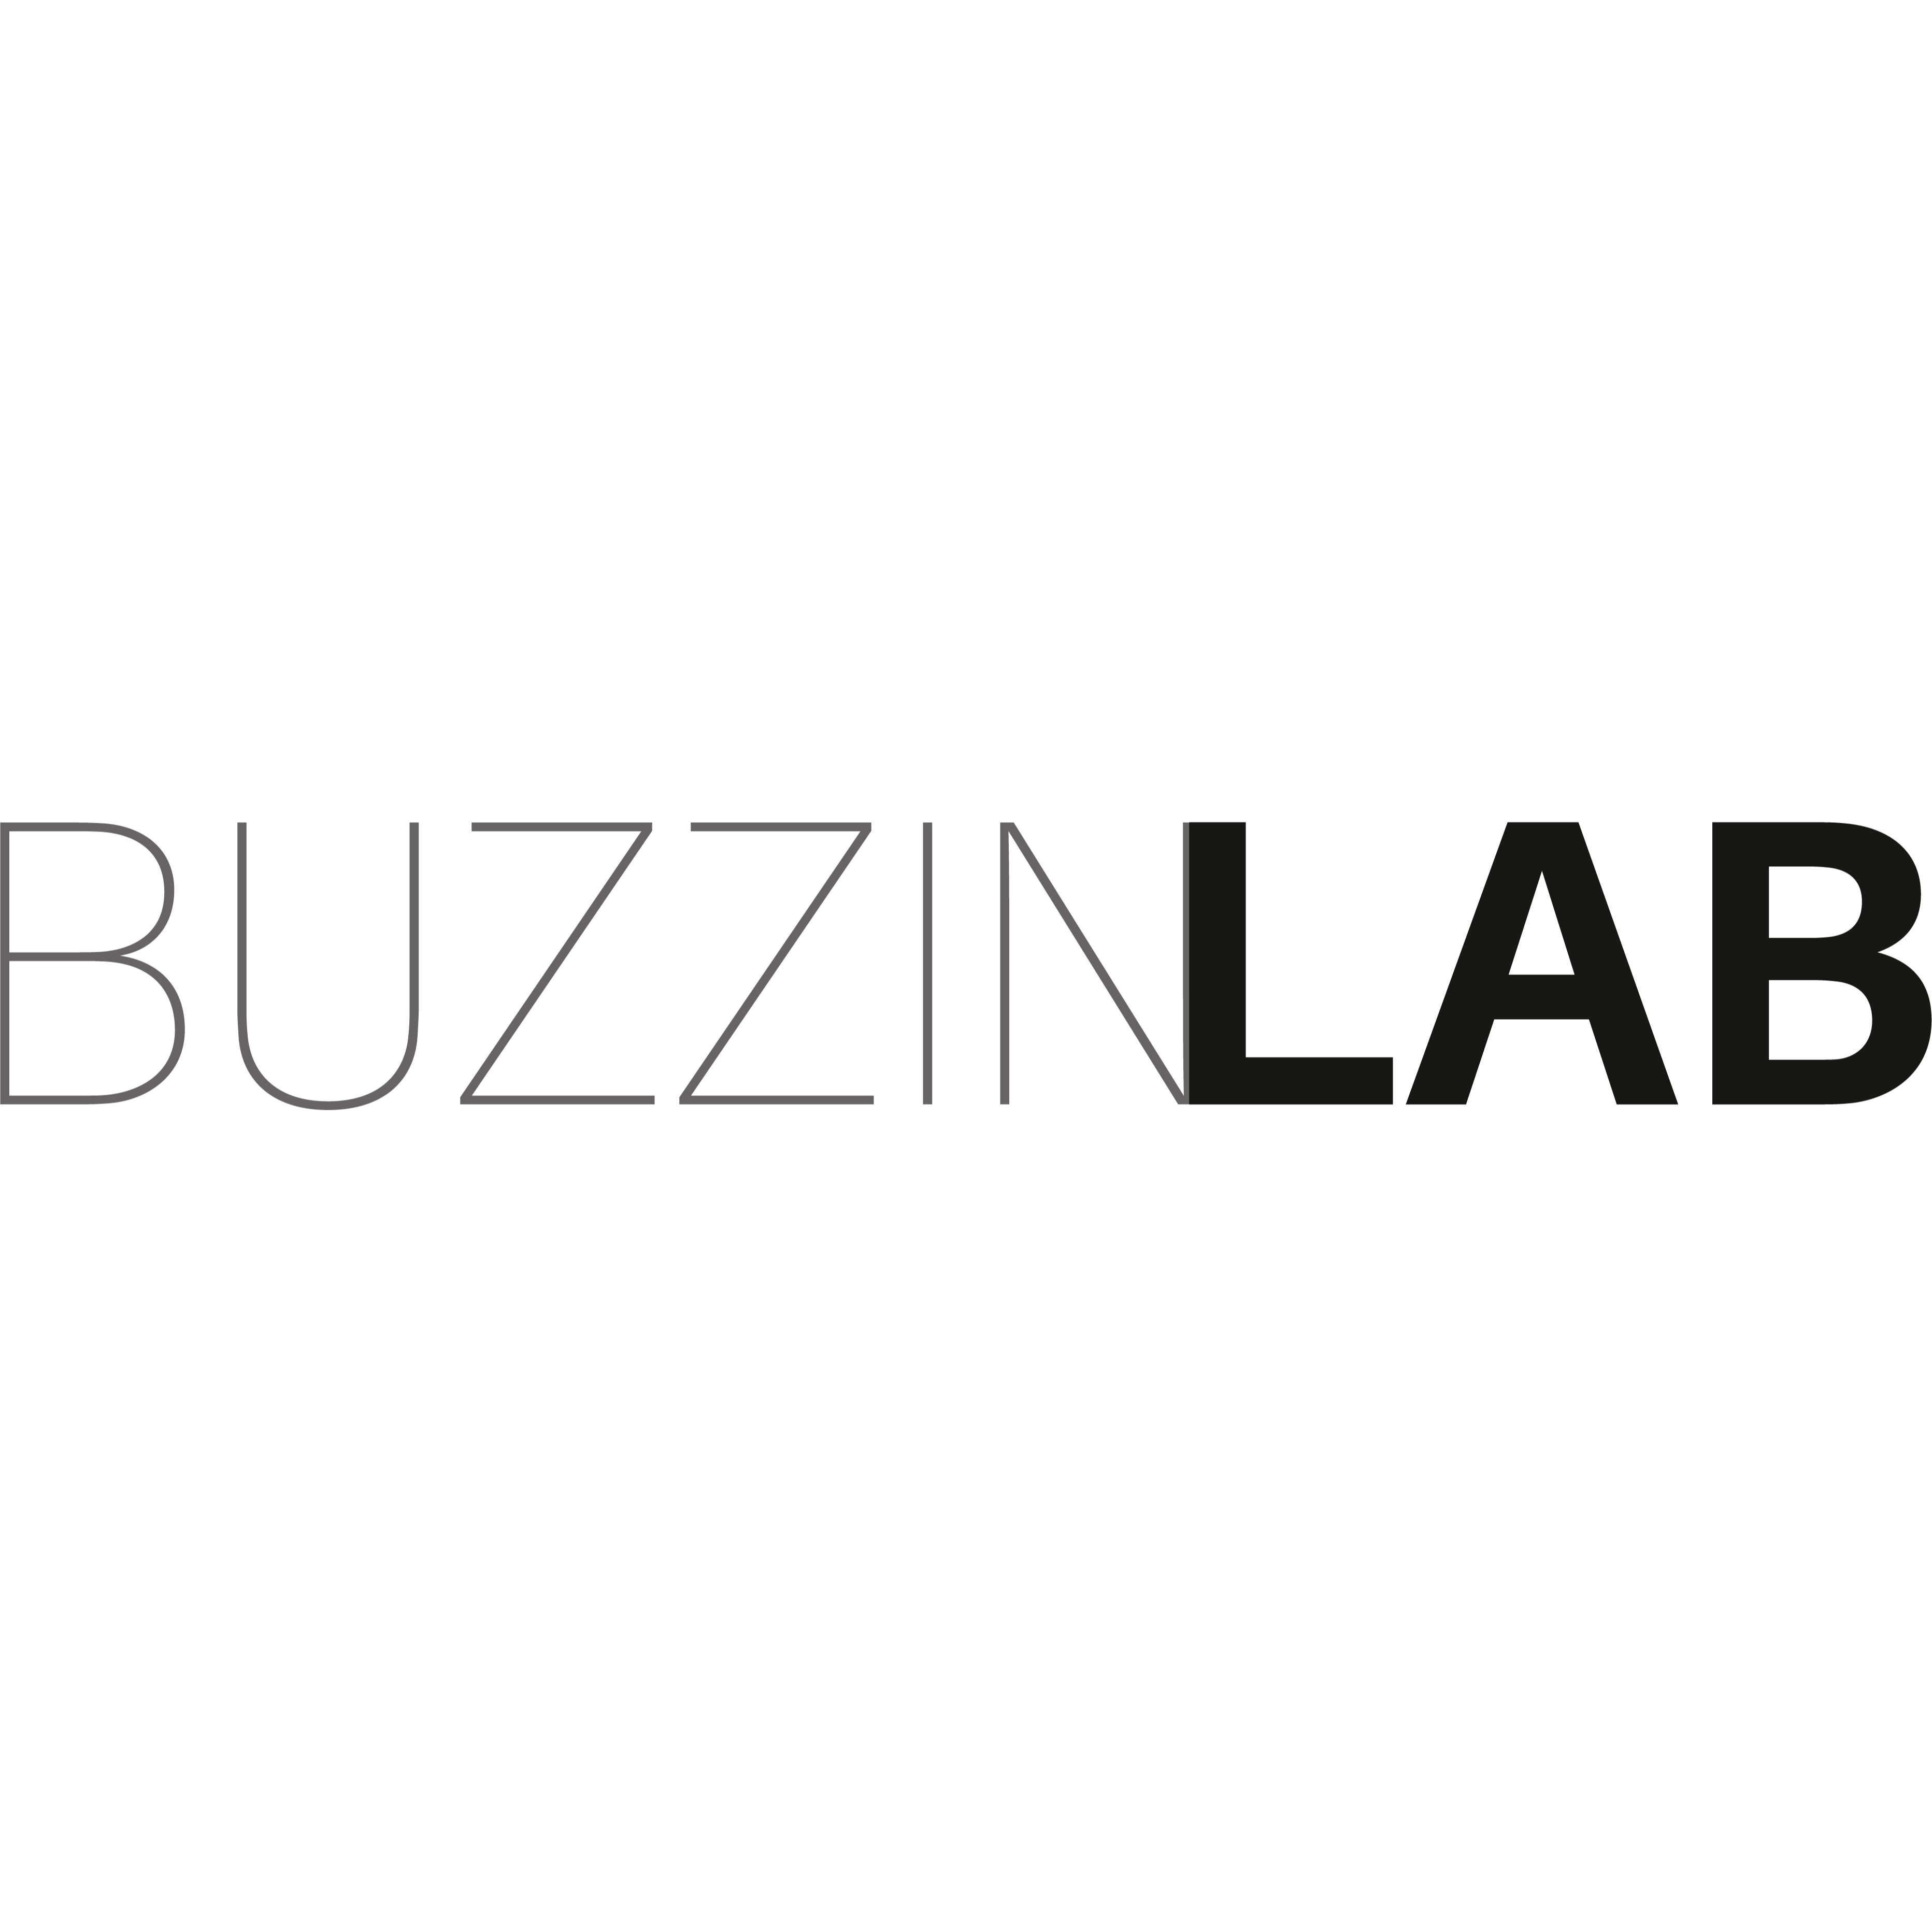 BUZZINLAB - The Club Office & Eventlocation  